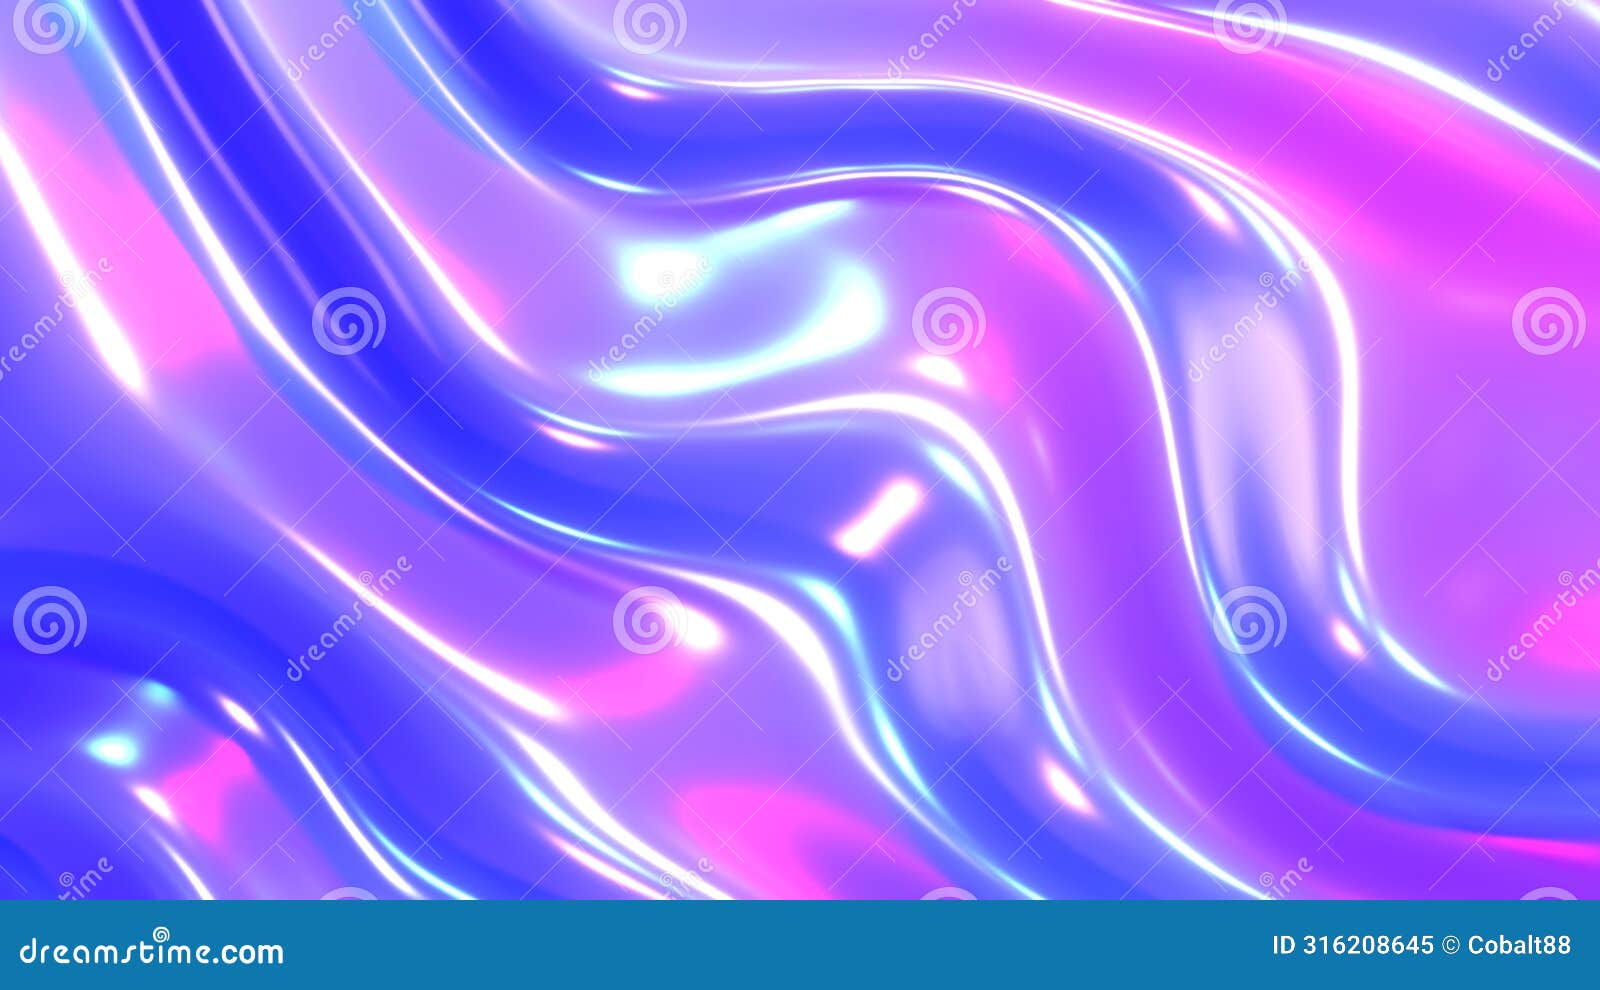 purple blue plastic shiny background, latex glossy texture pattern wallpaper